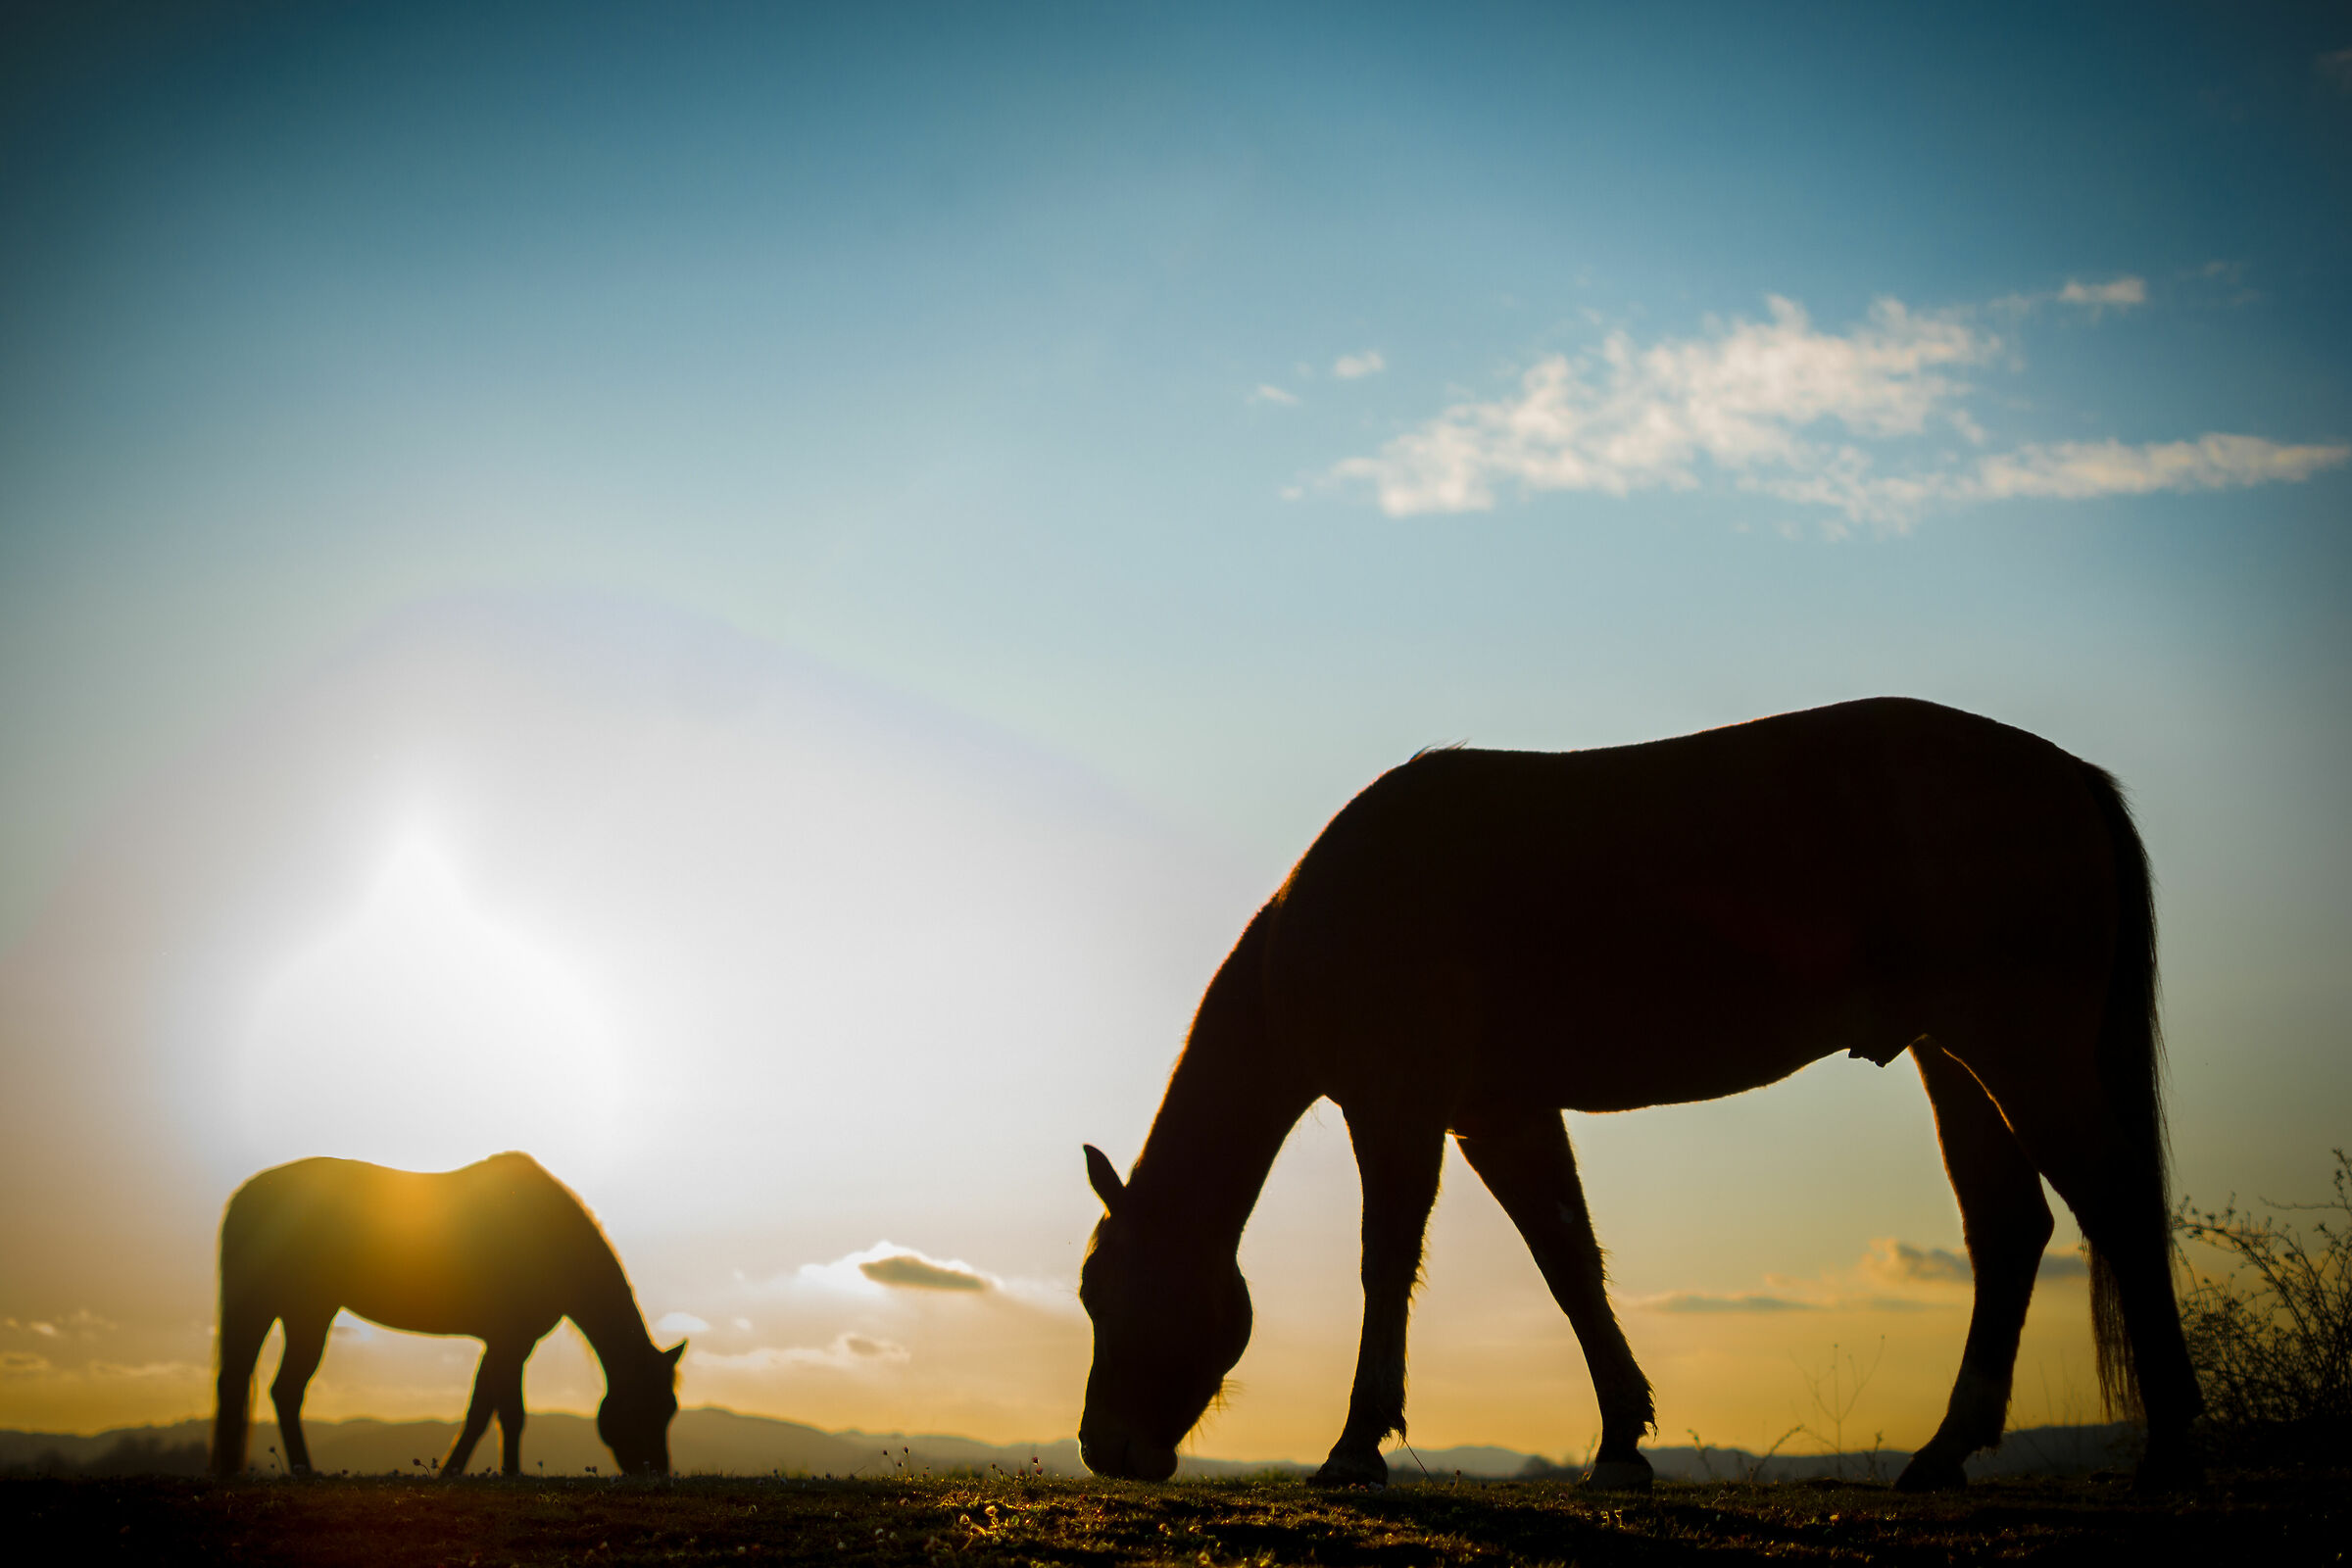 Horses at sunset...